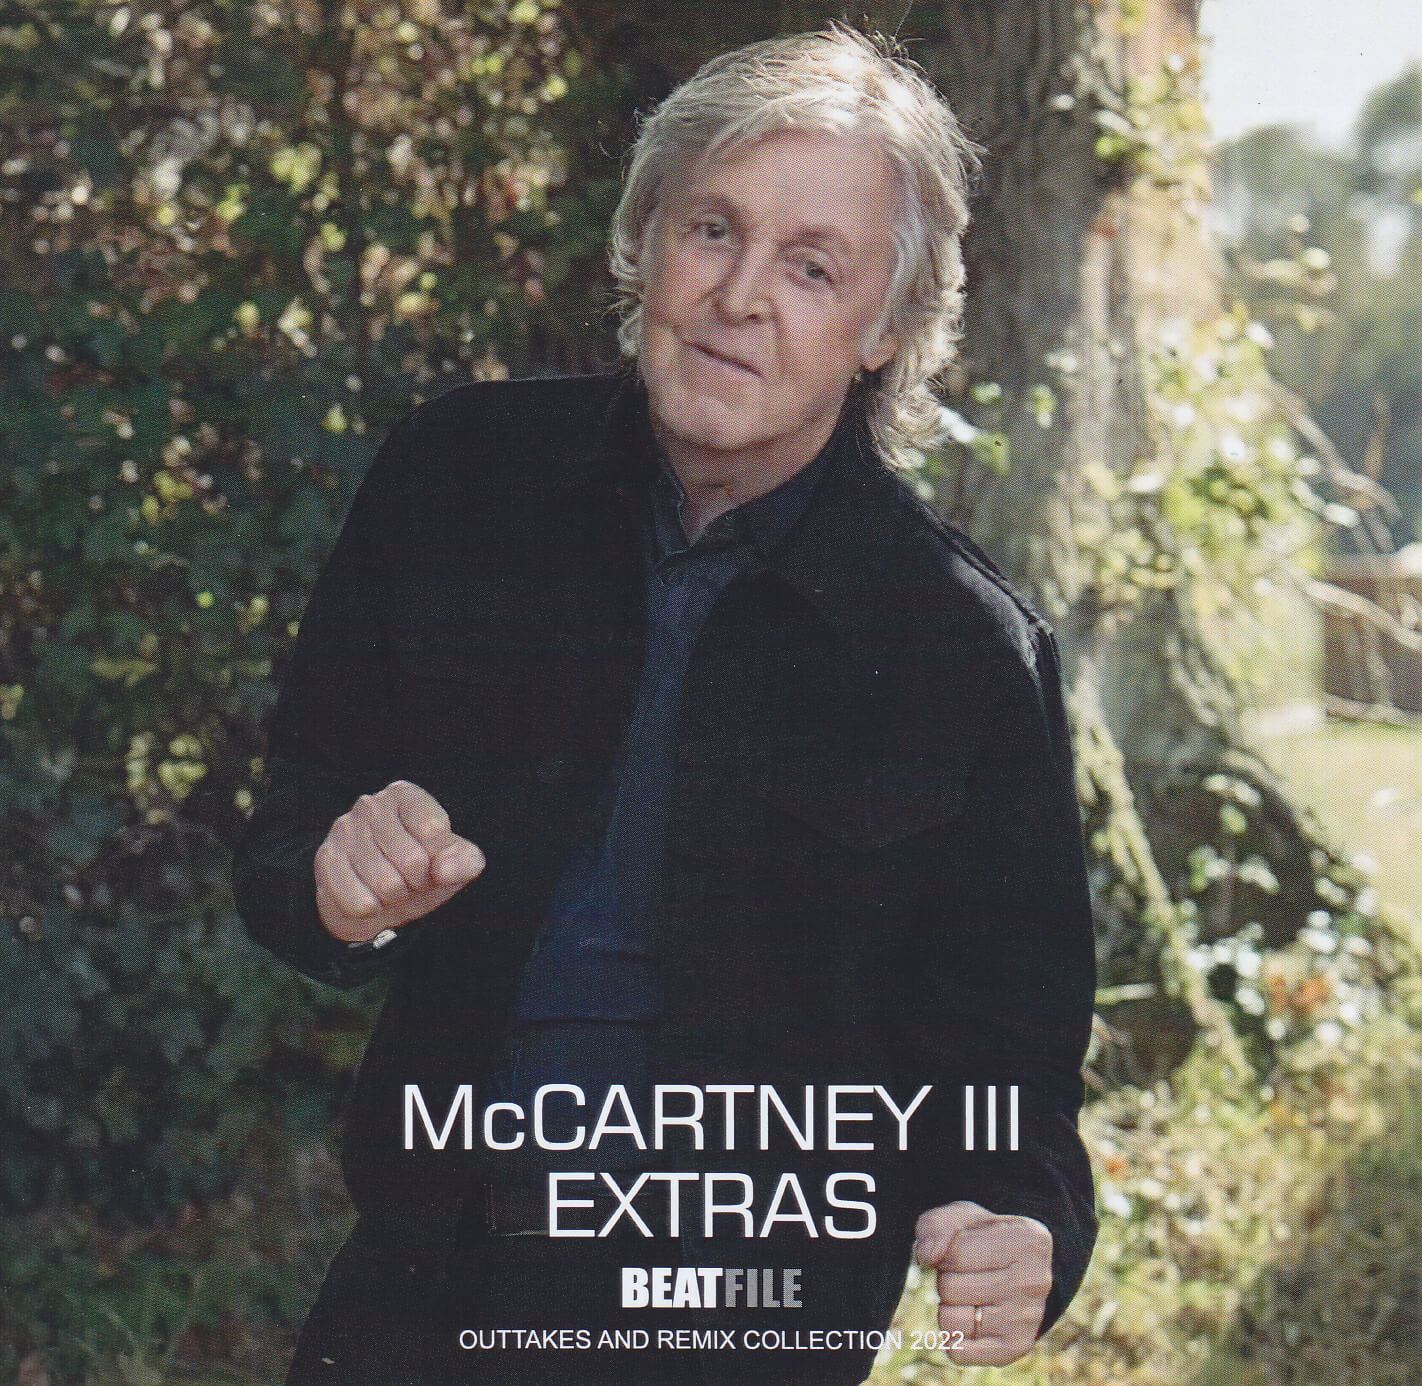 Paul McCartney / McCartney III Extras / 1CDR – GiGinJapan